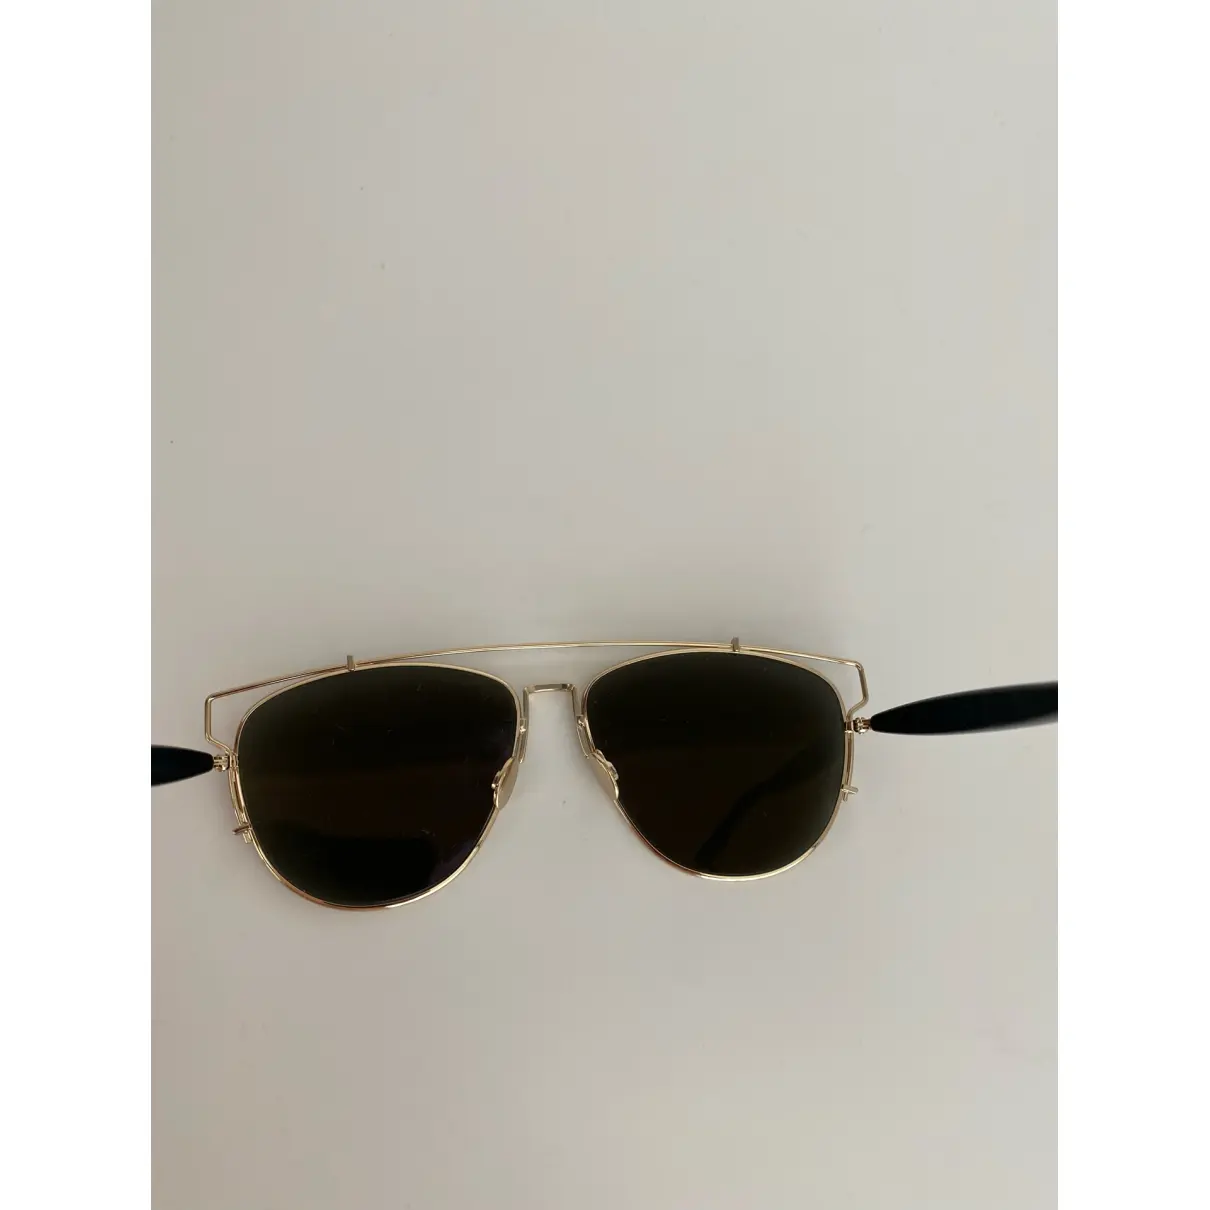 Technologic sunglasses Dior